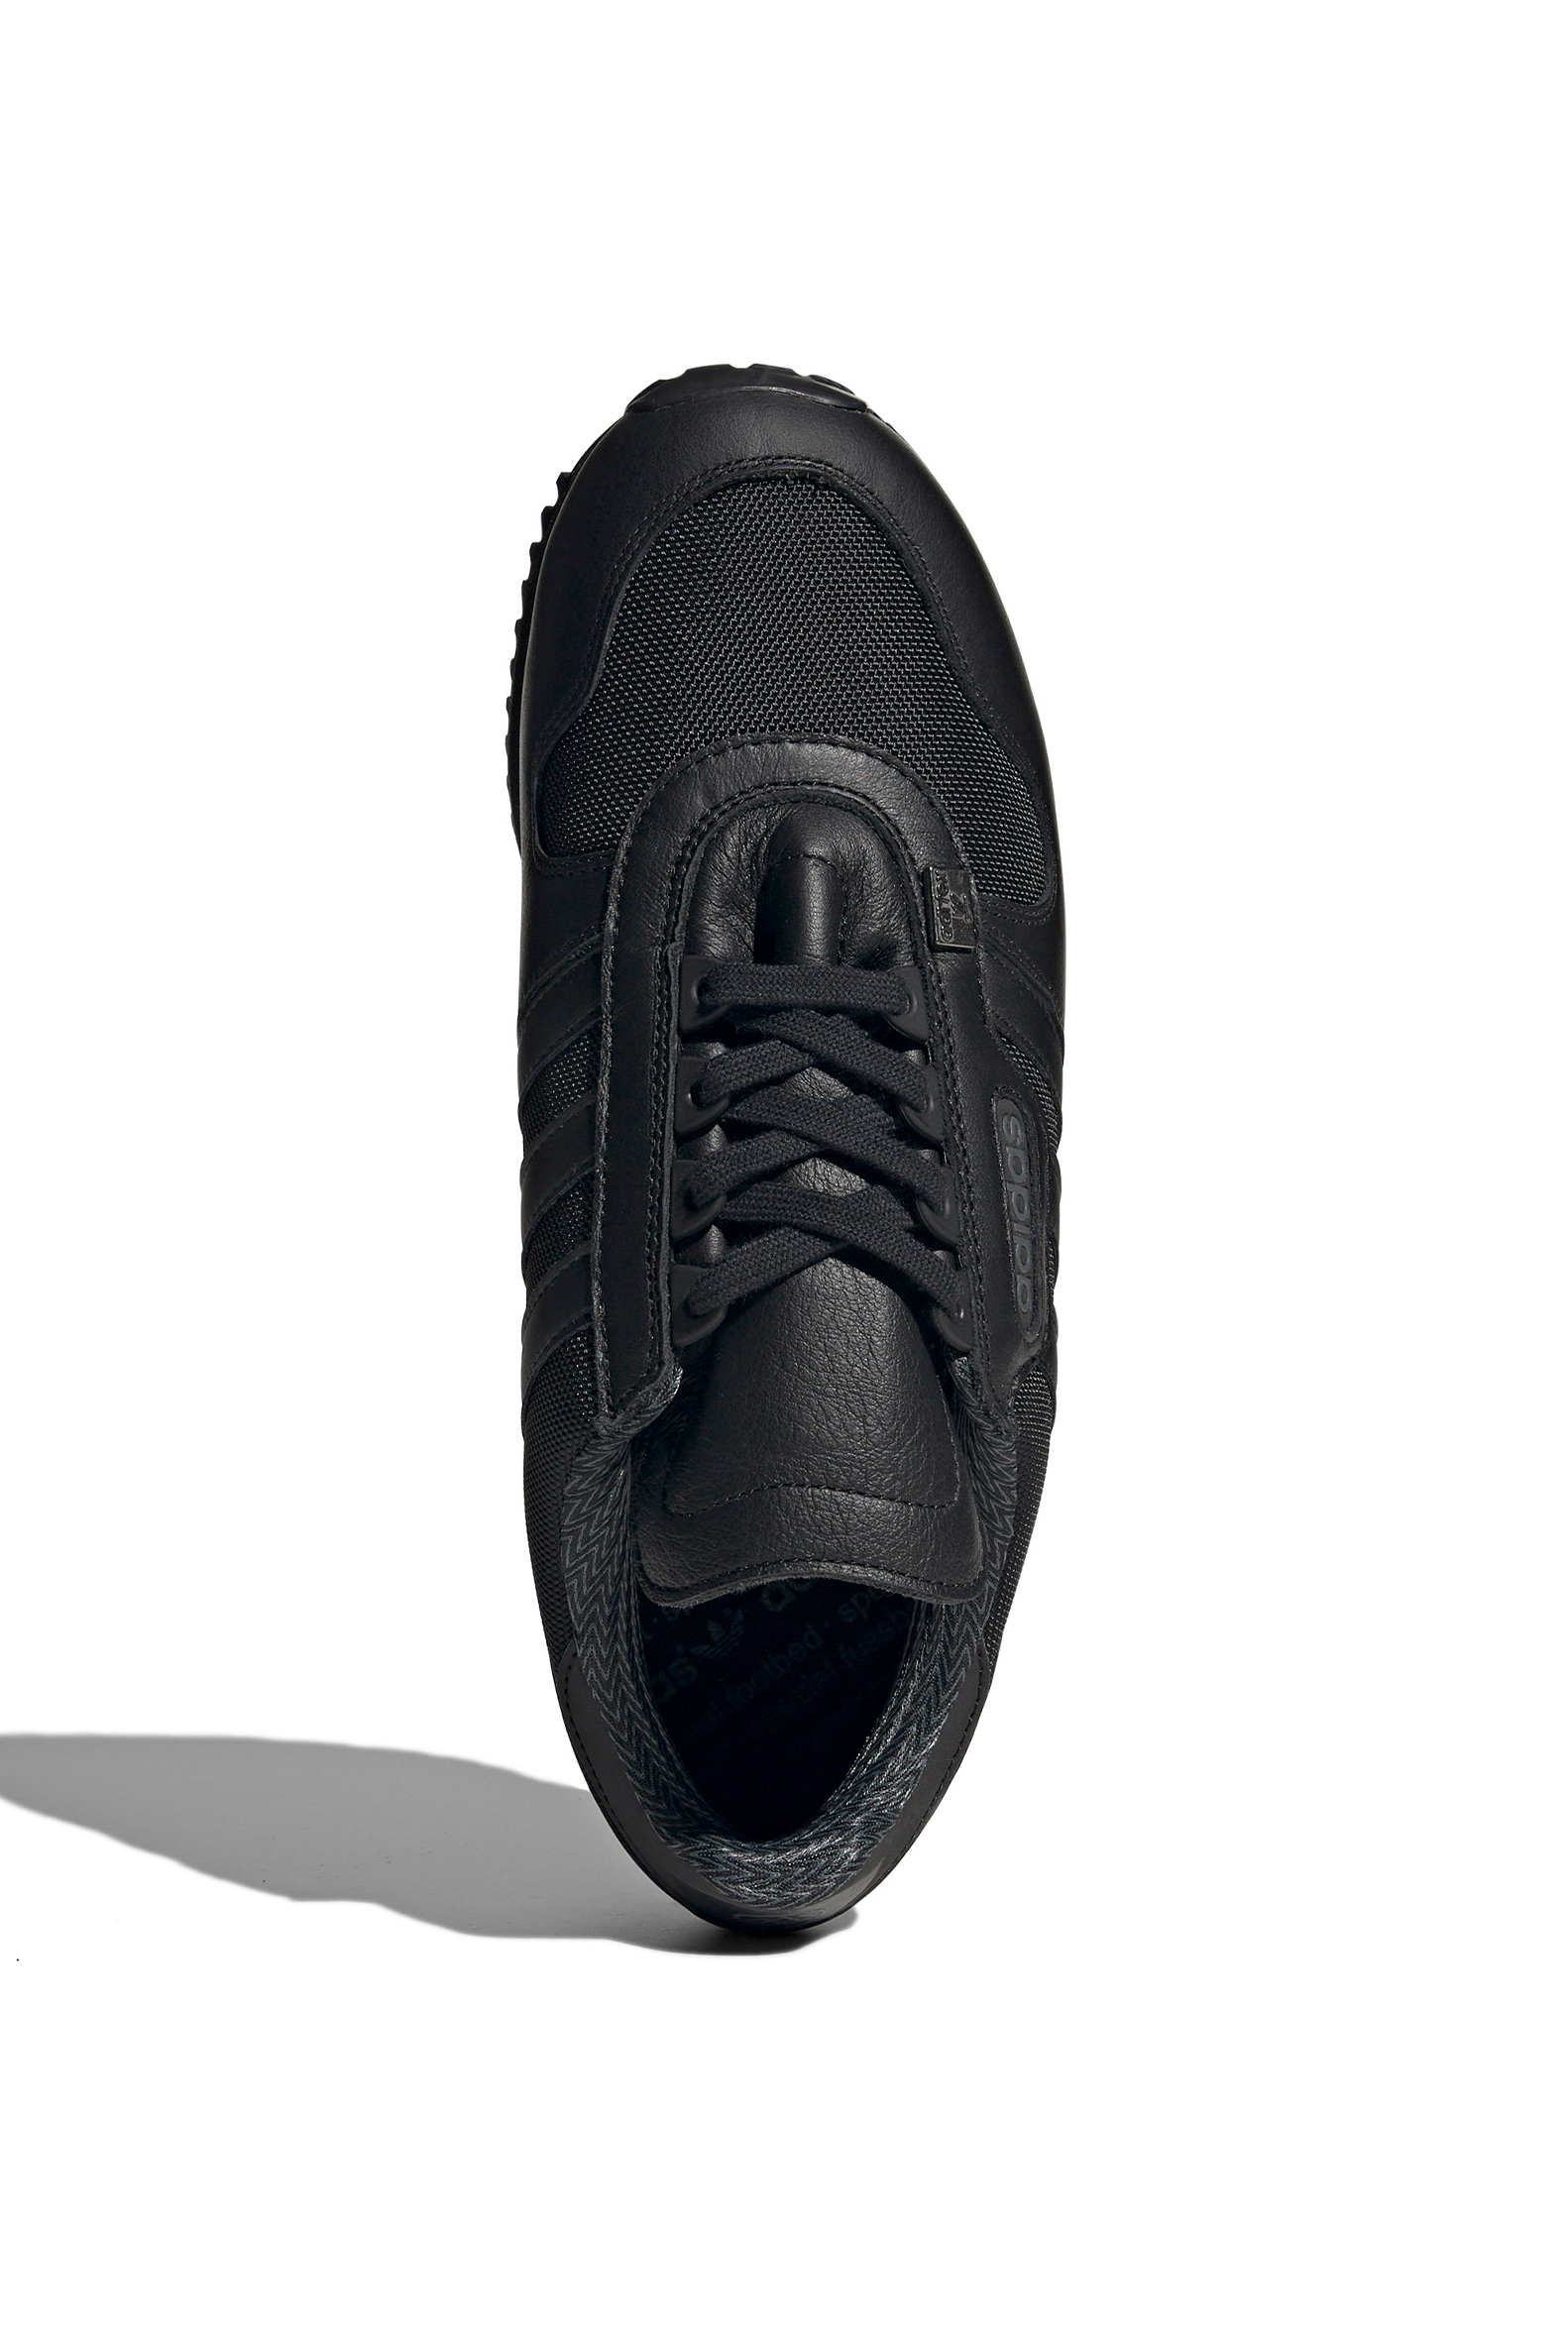 ADIDAS Hartness Spzl | Sneakers | Sneakers & Casual Shoes | Shoes | Men ...